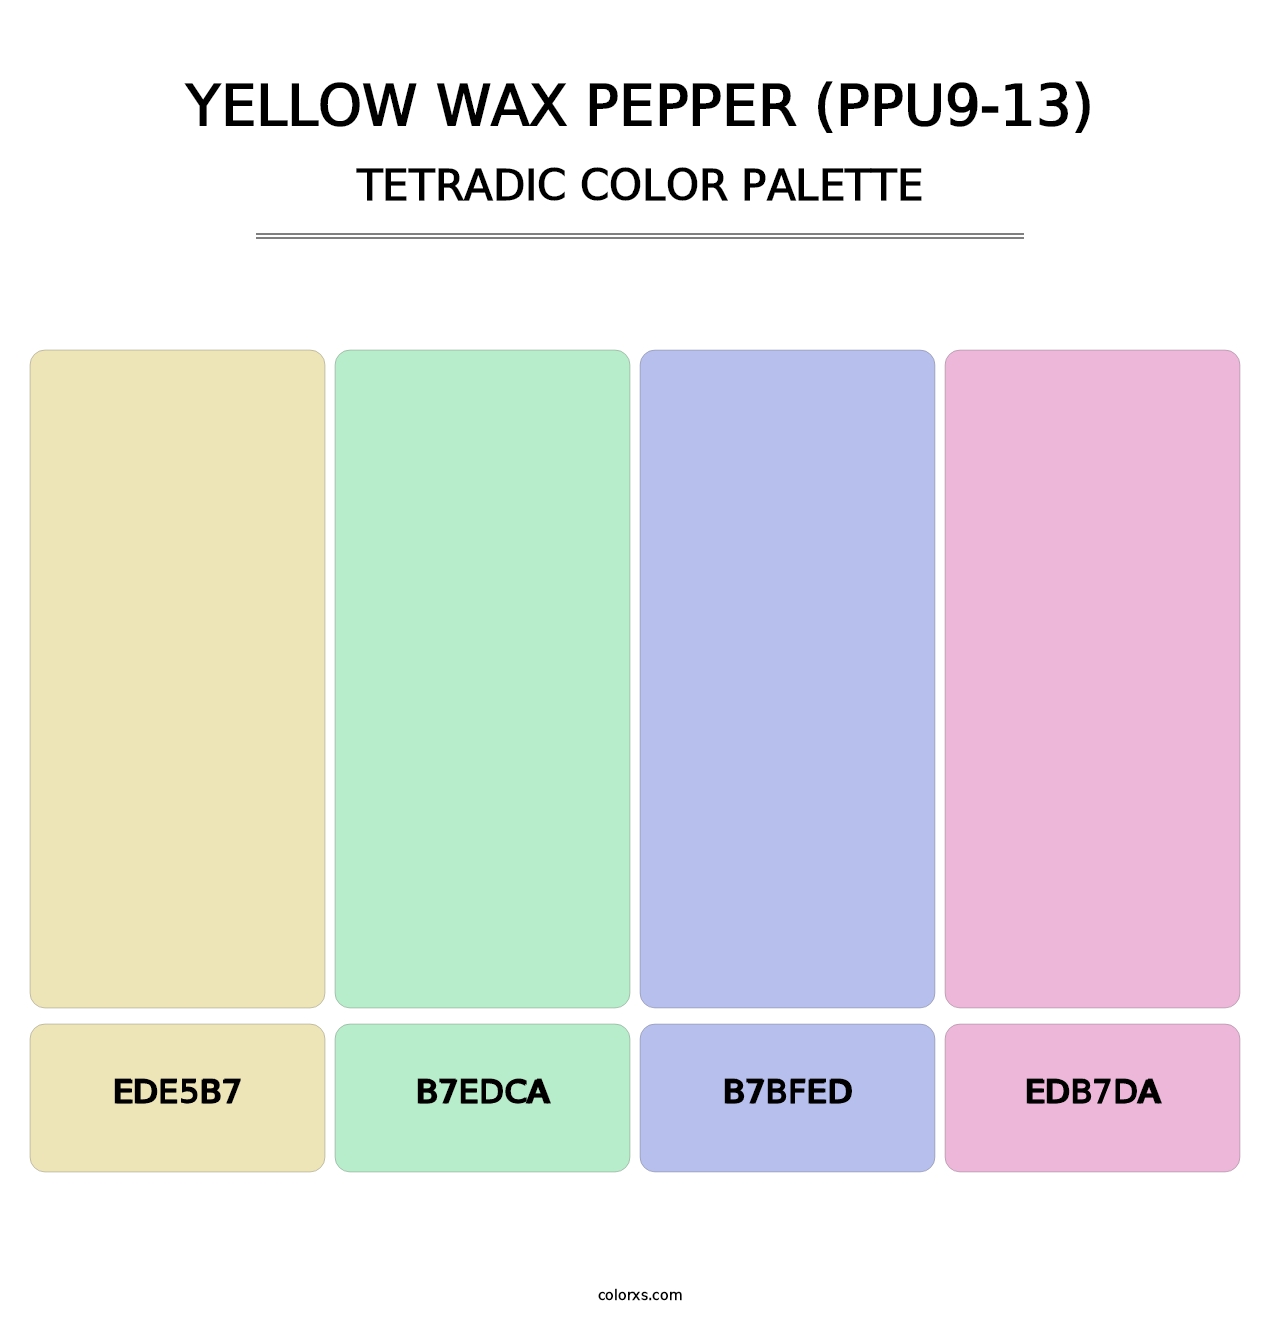 Yellow Wax Pepper (PPU9-13) - Tetradic Color Palette